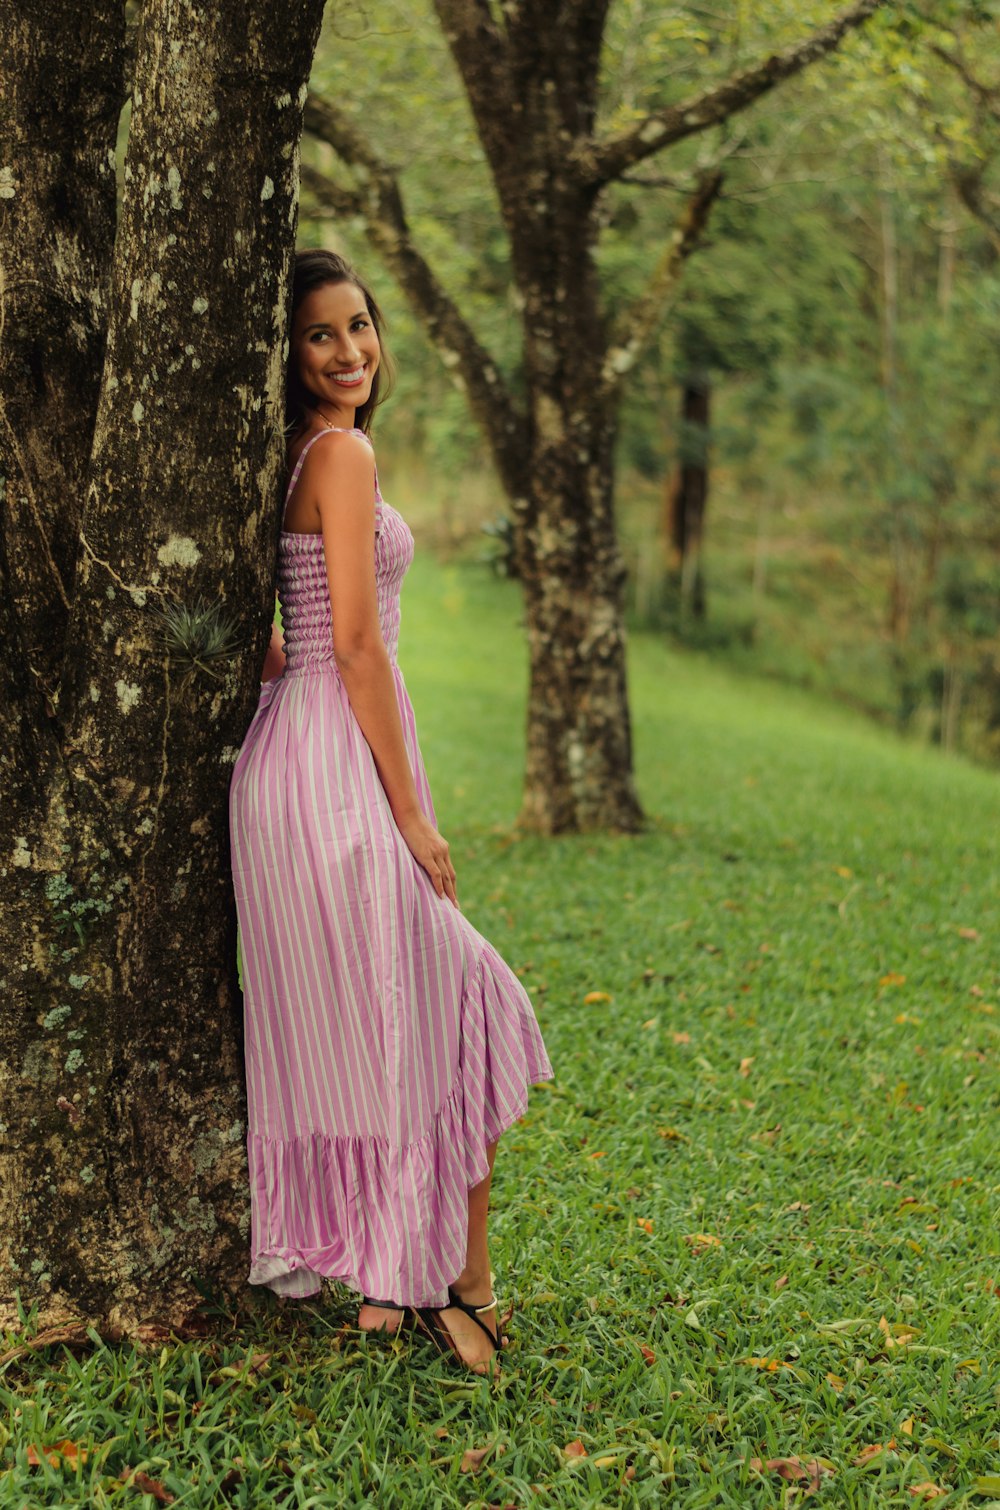 girl in pink dress standing on green grass field